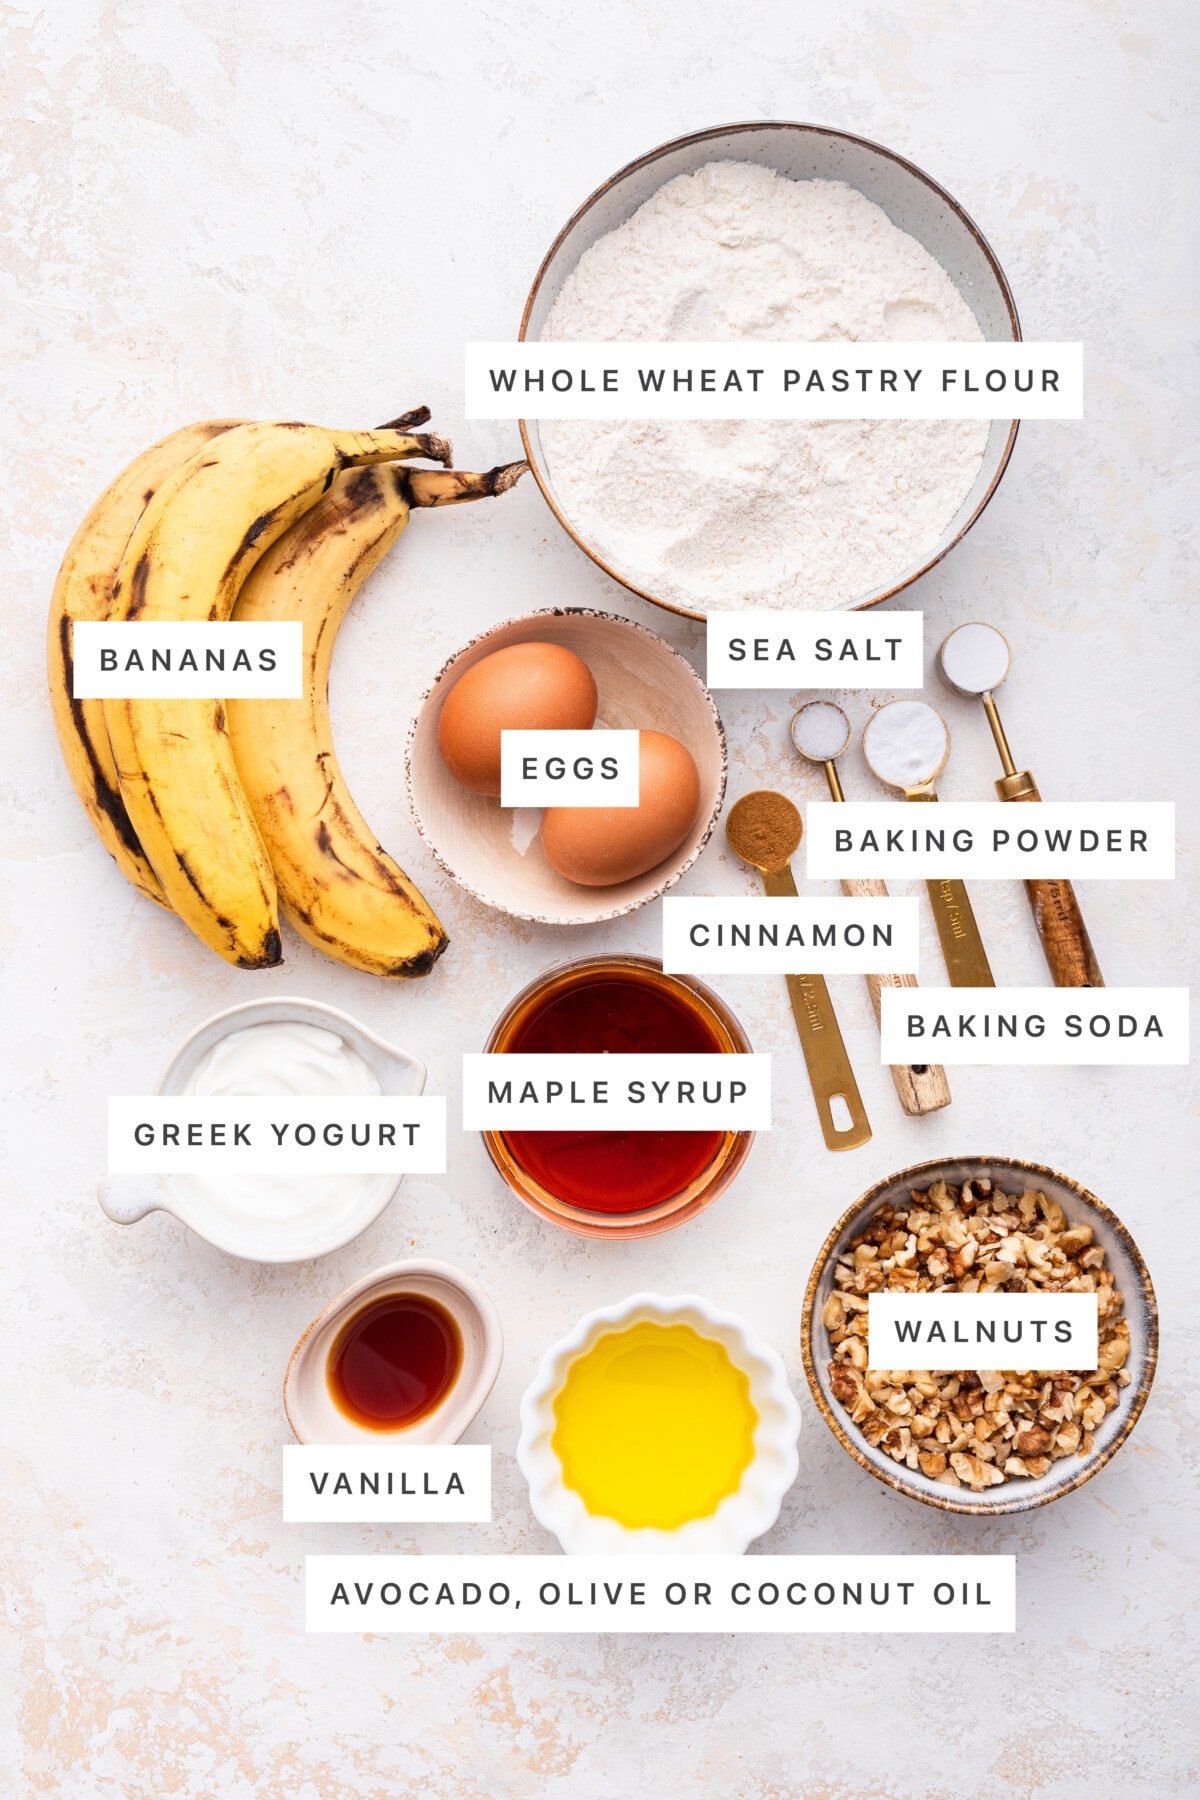 Ingredients measured out to make Healthy Banana Muffins: whole wheat flour, bananas, eggs, sea salt, cinnamon, baking powder, baking soda, maple syrup, Greek yogurt, vanilla, oil and walnuts.